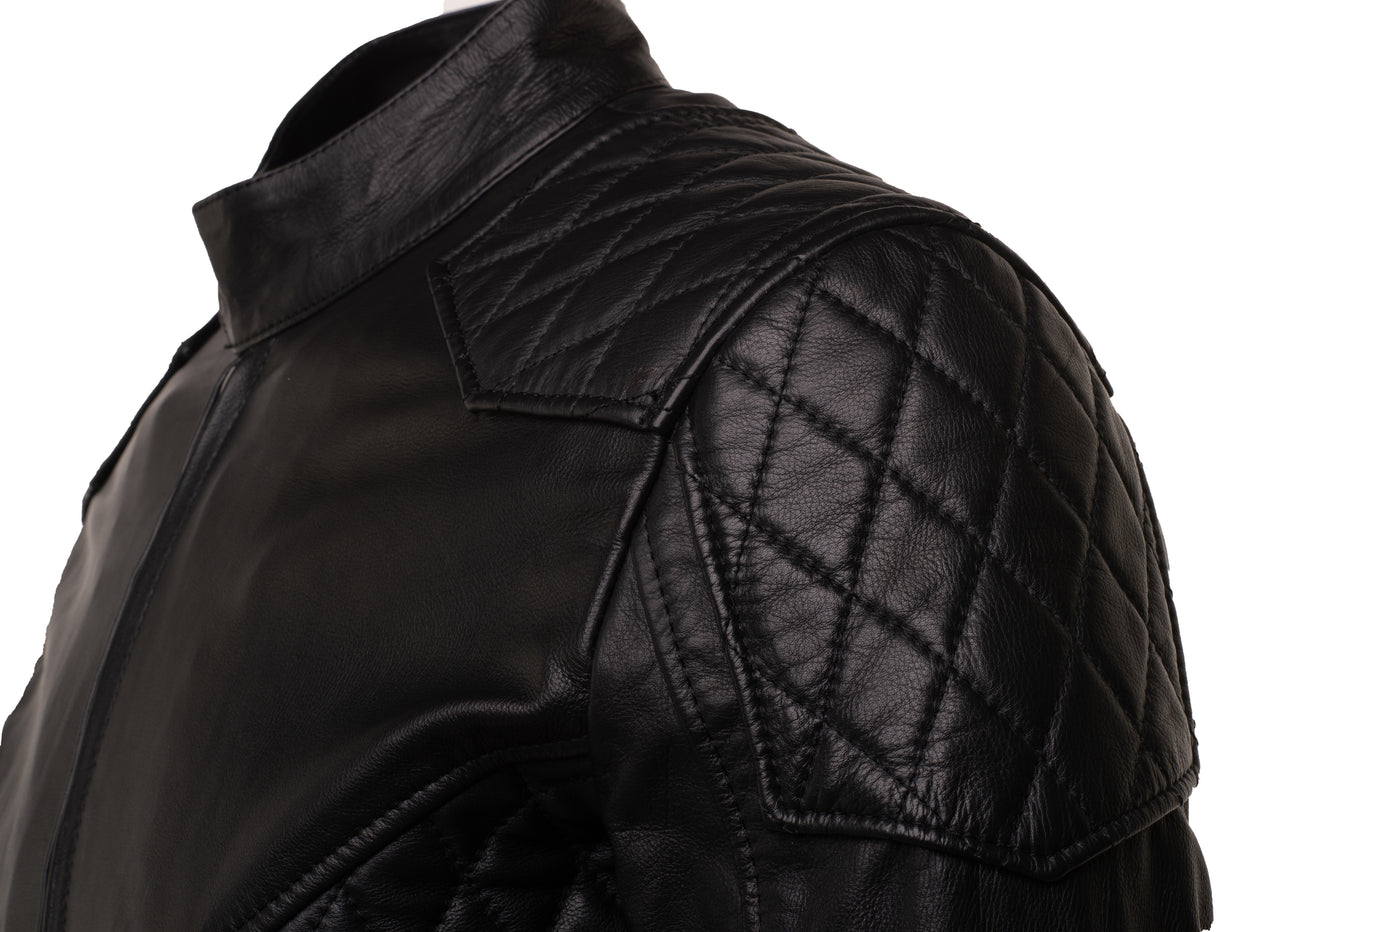 Welsh's moto jacket with diamond stitching